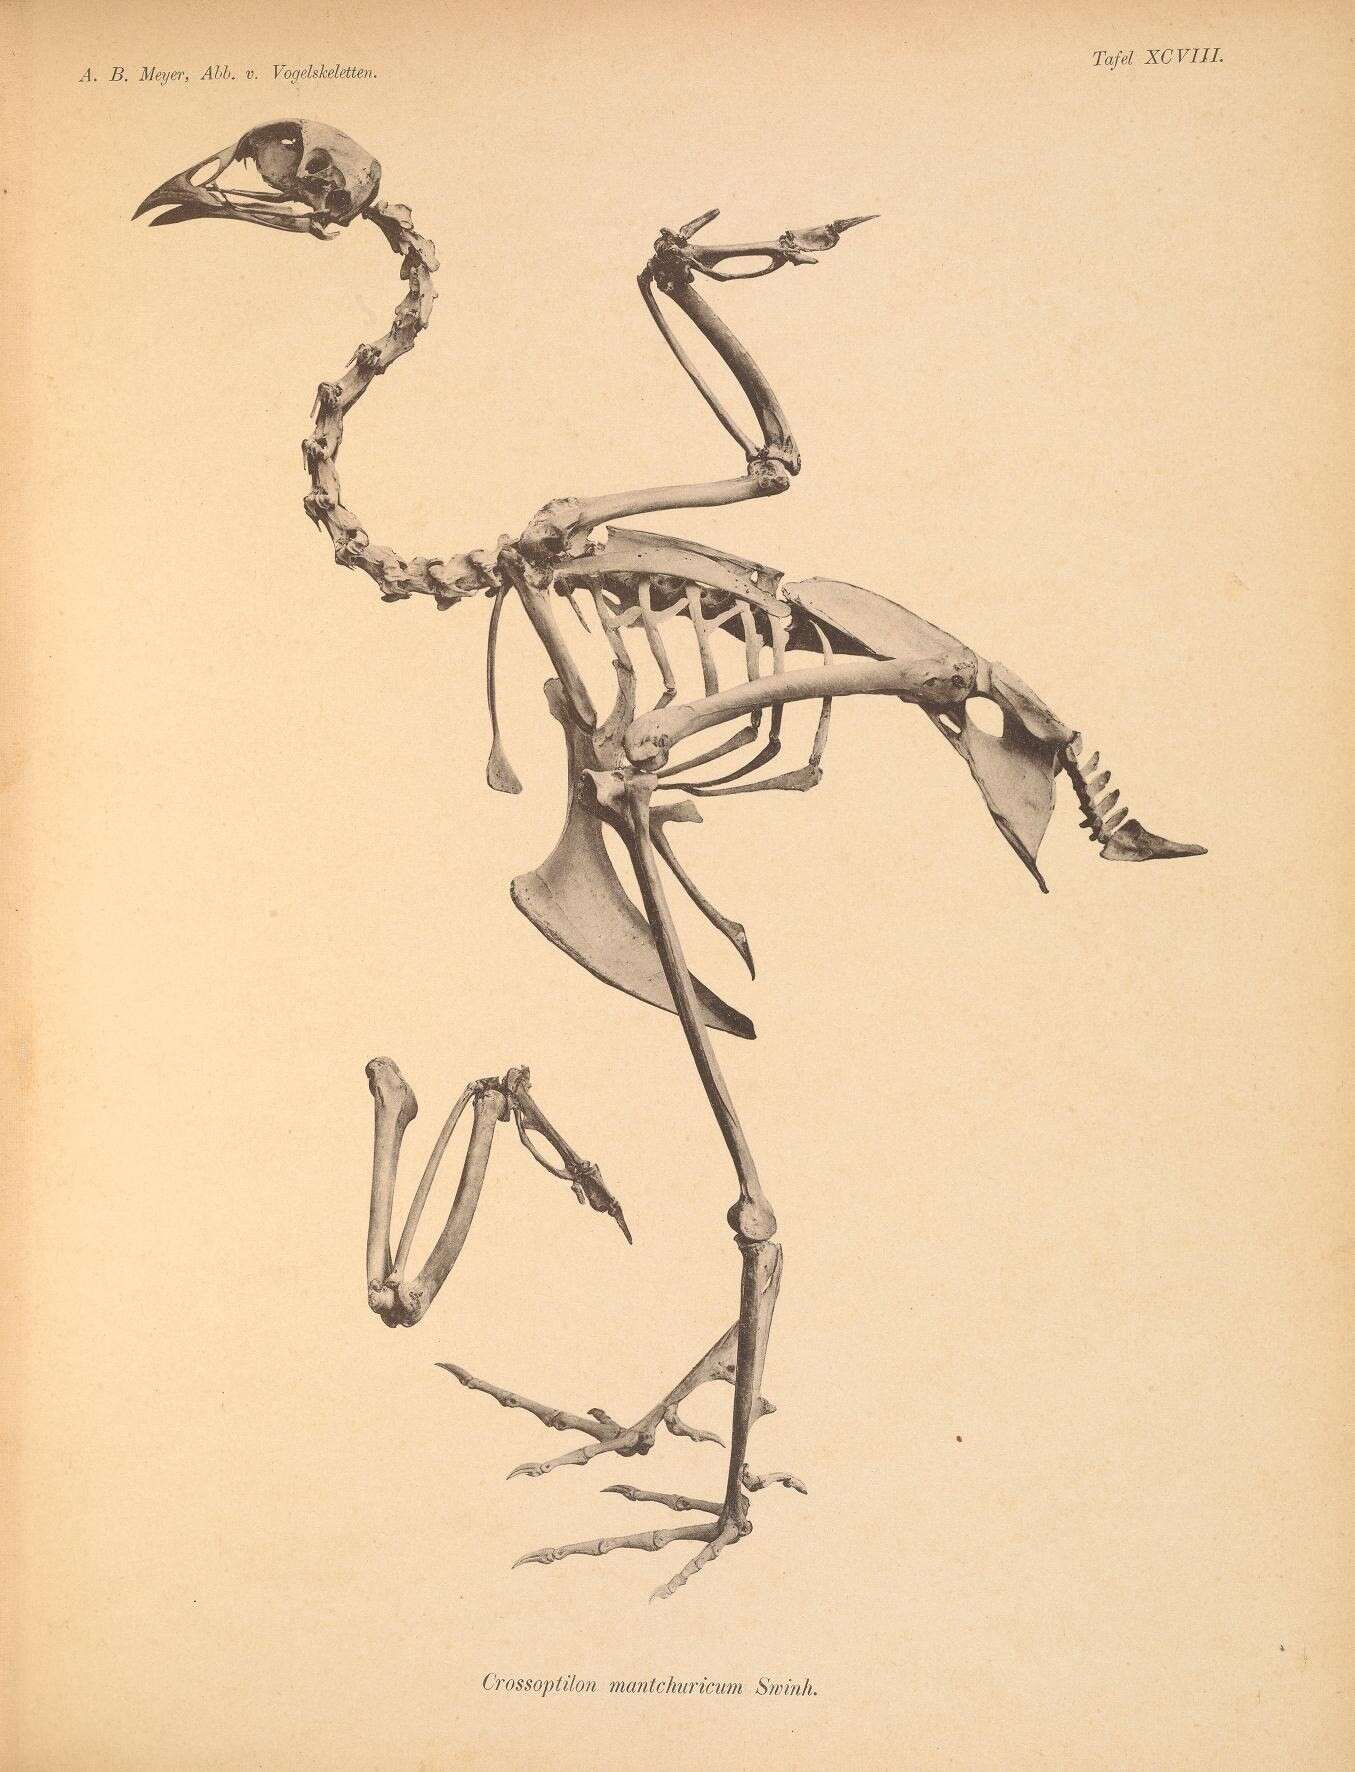 Crossoptilon mantchuricum Swinhoe 1863 resmi